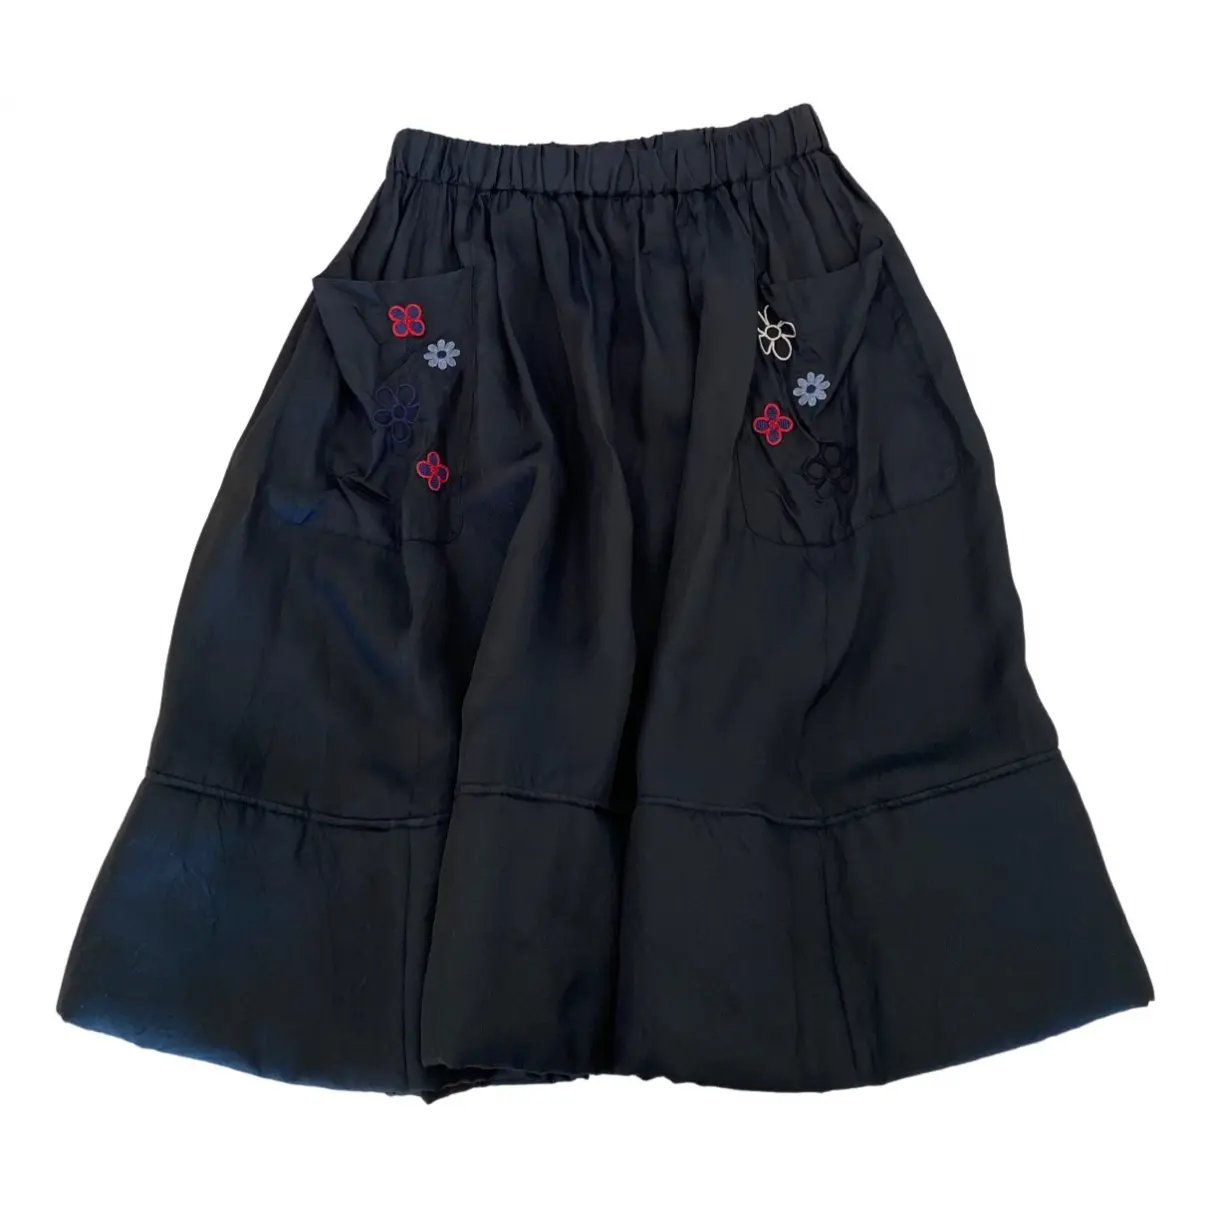 Mid-length skirt Comme Des Garcons